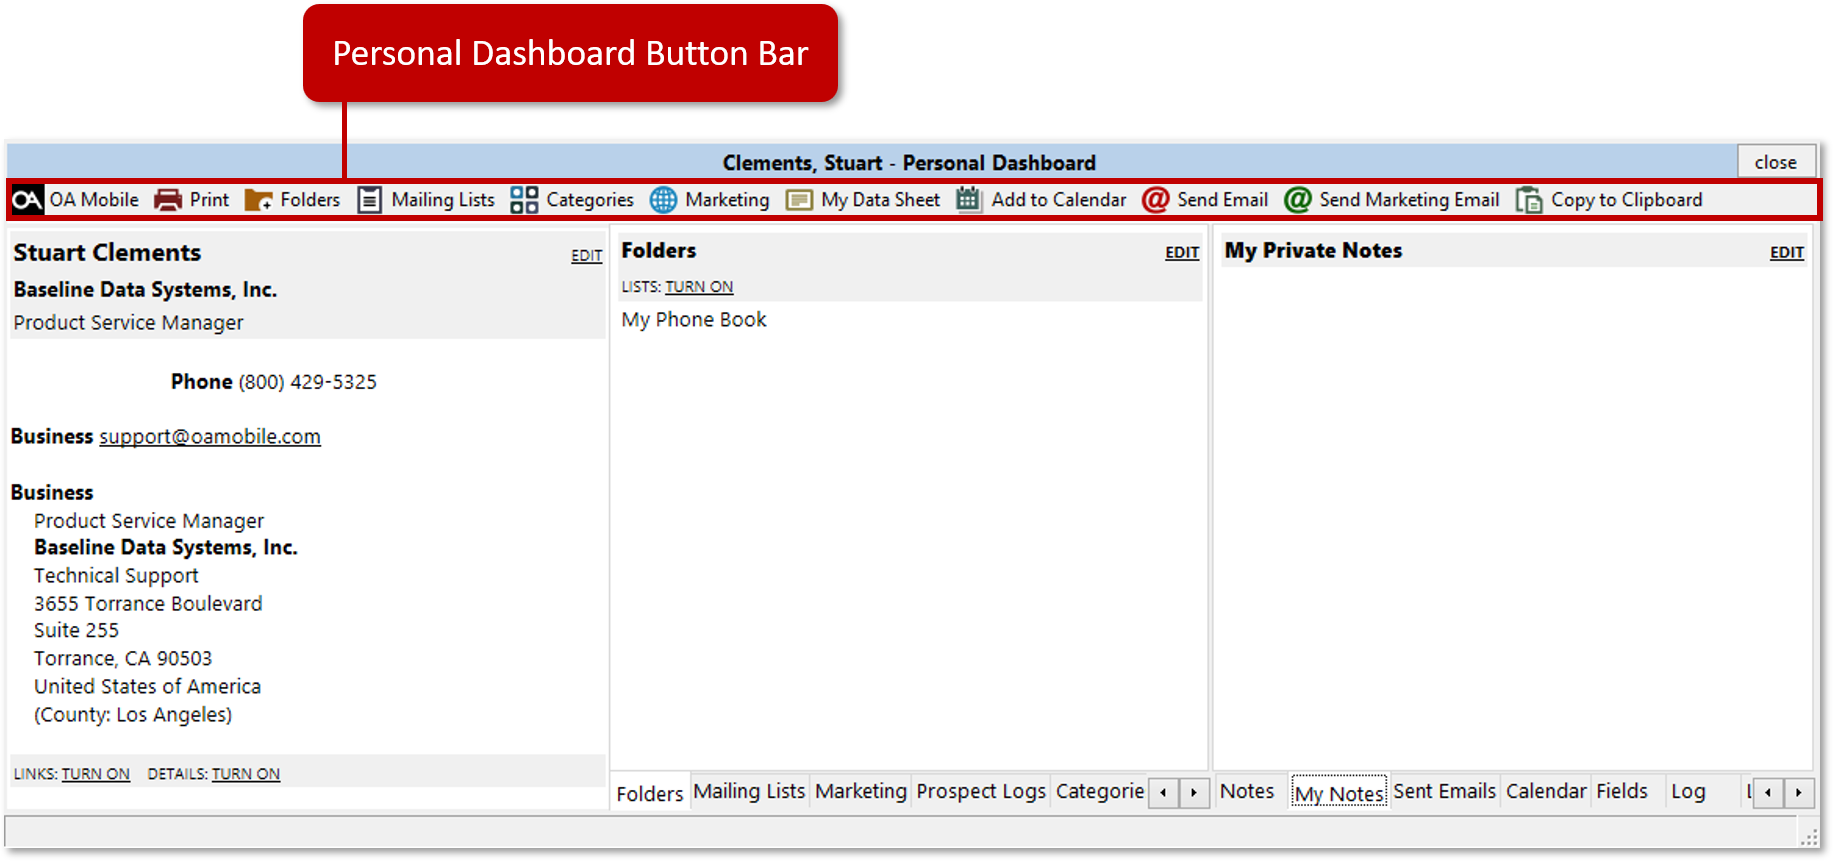 Office Accelerator Phone Book Personal Dashboard Button Bar